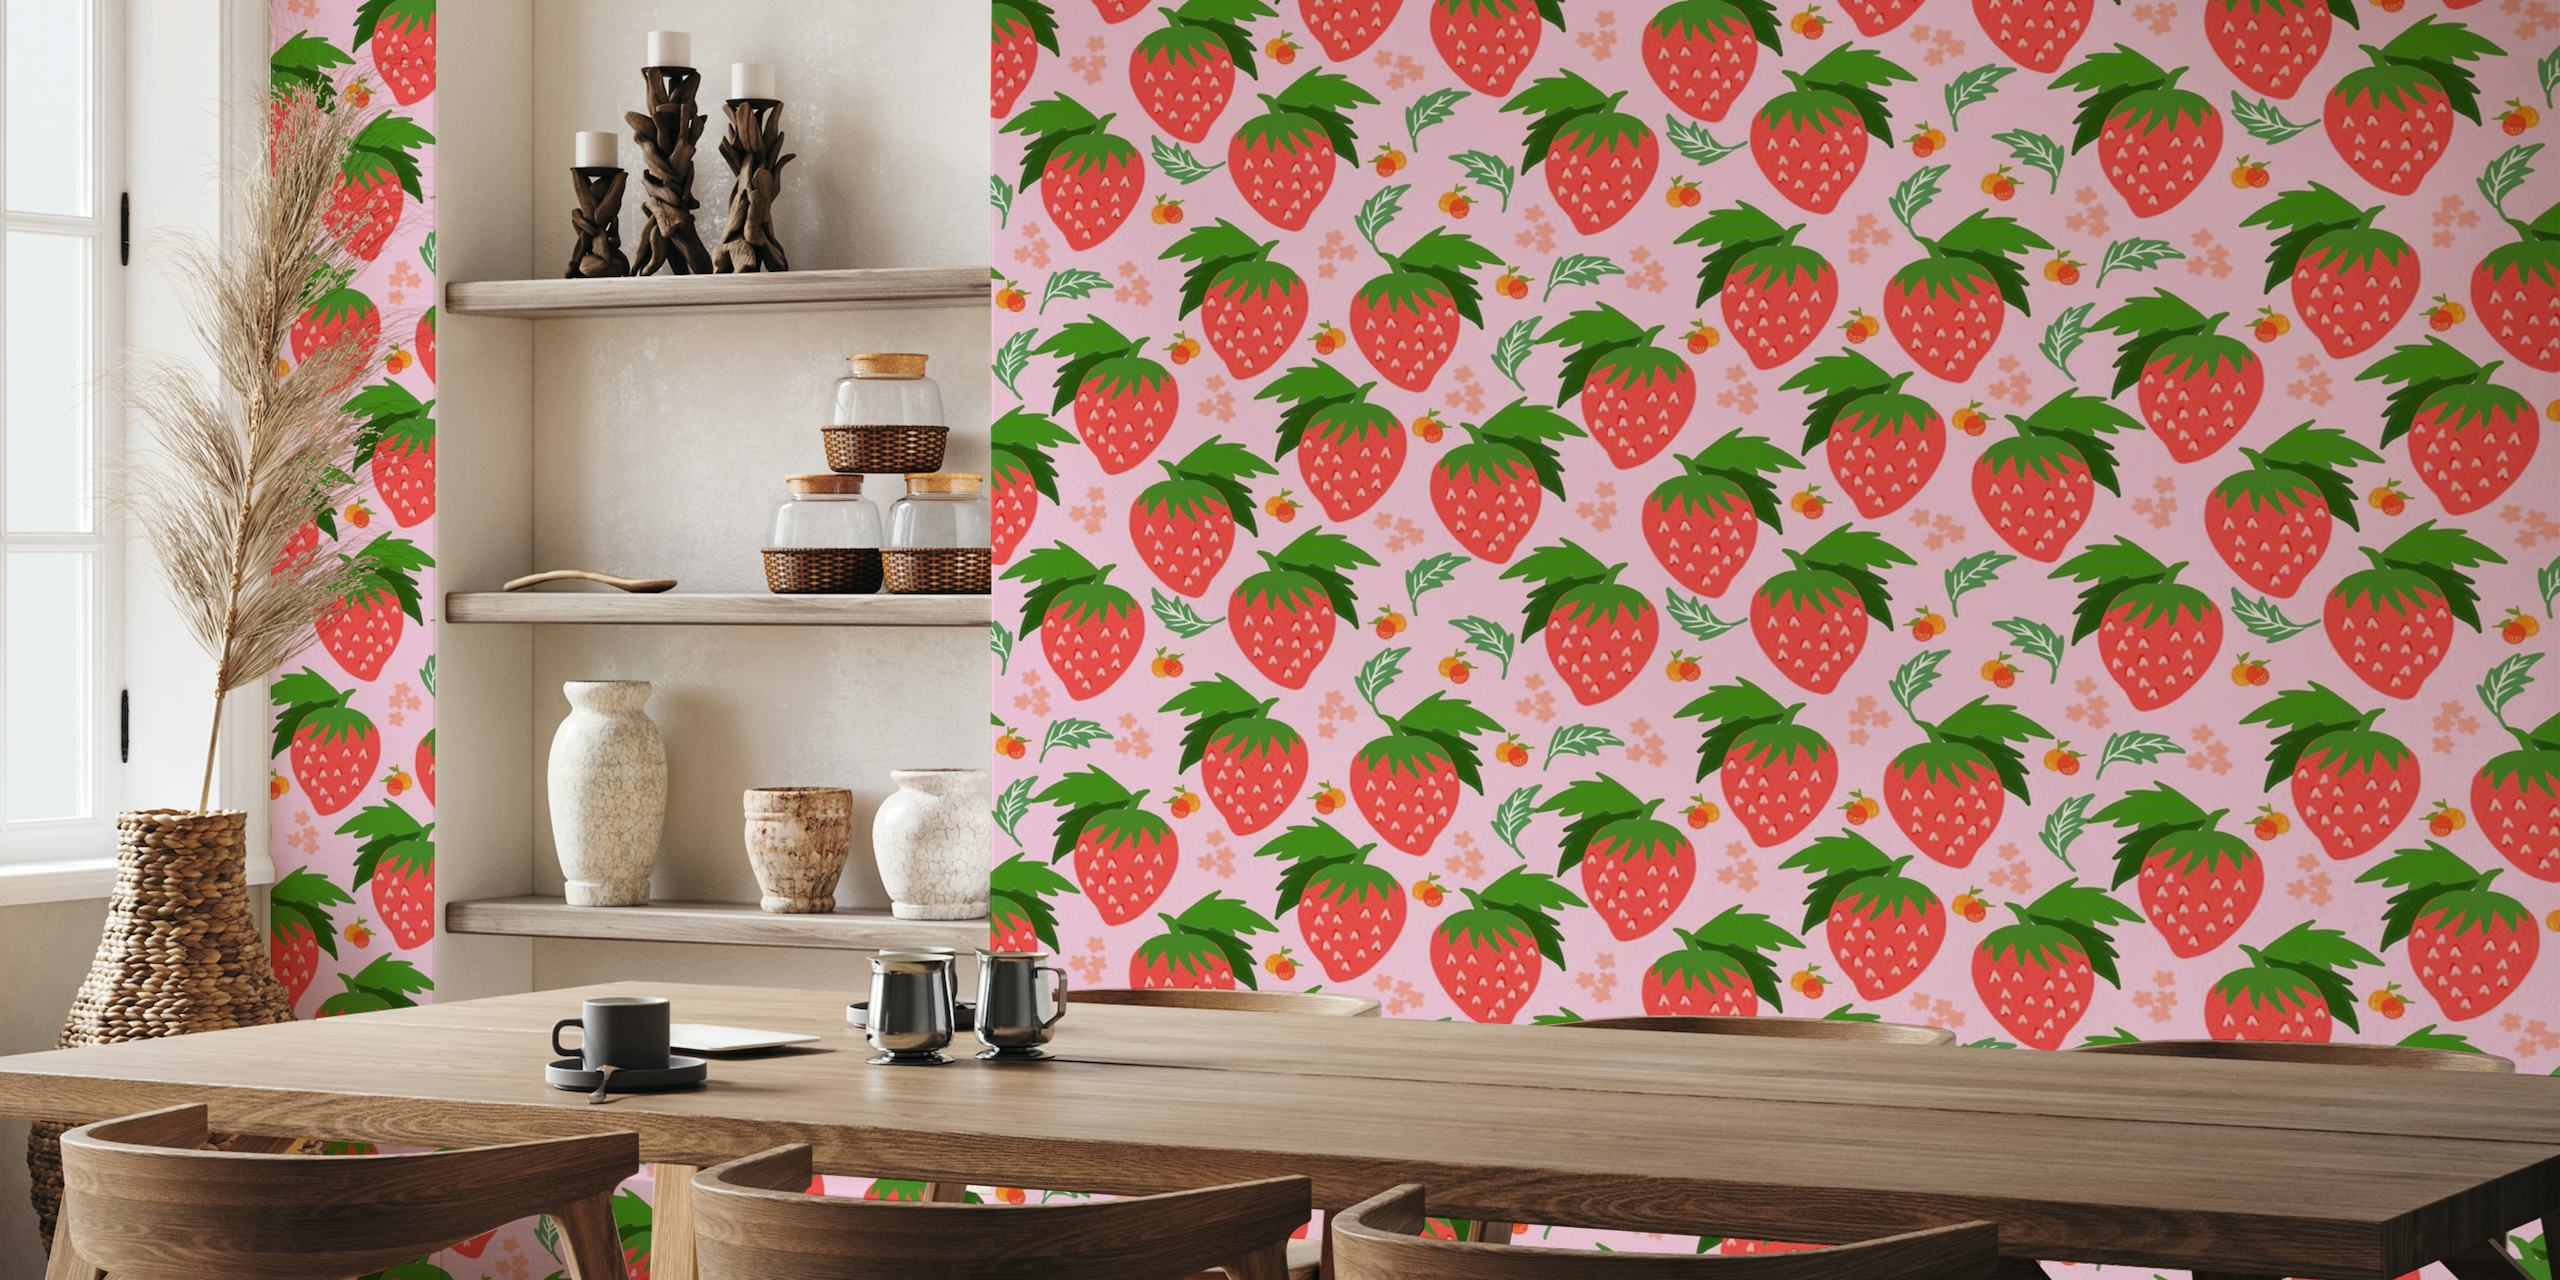 Roze fotobehang in Kawaii-stijl met aardbeien en fruitige elementen